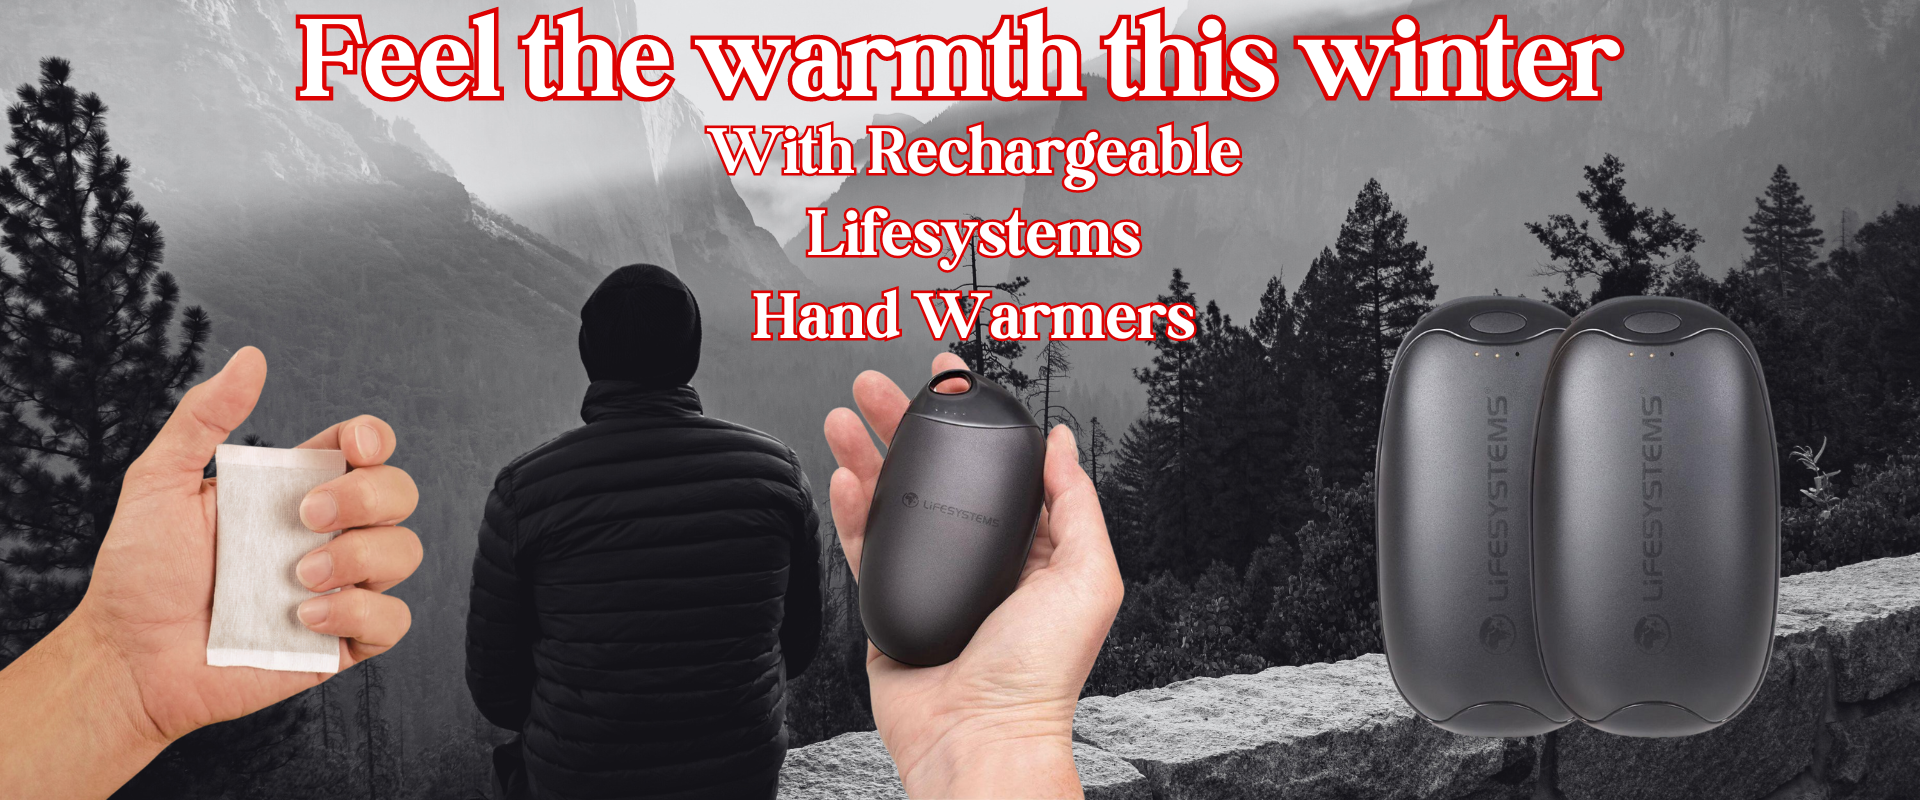 handwarmer